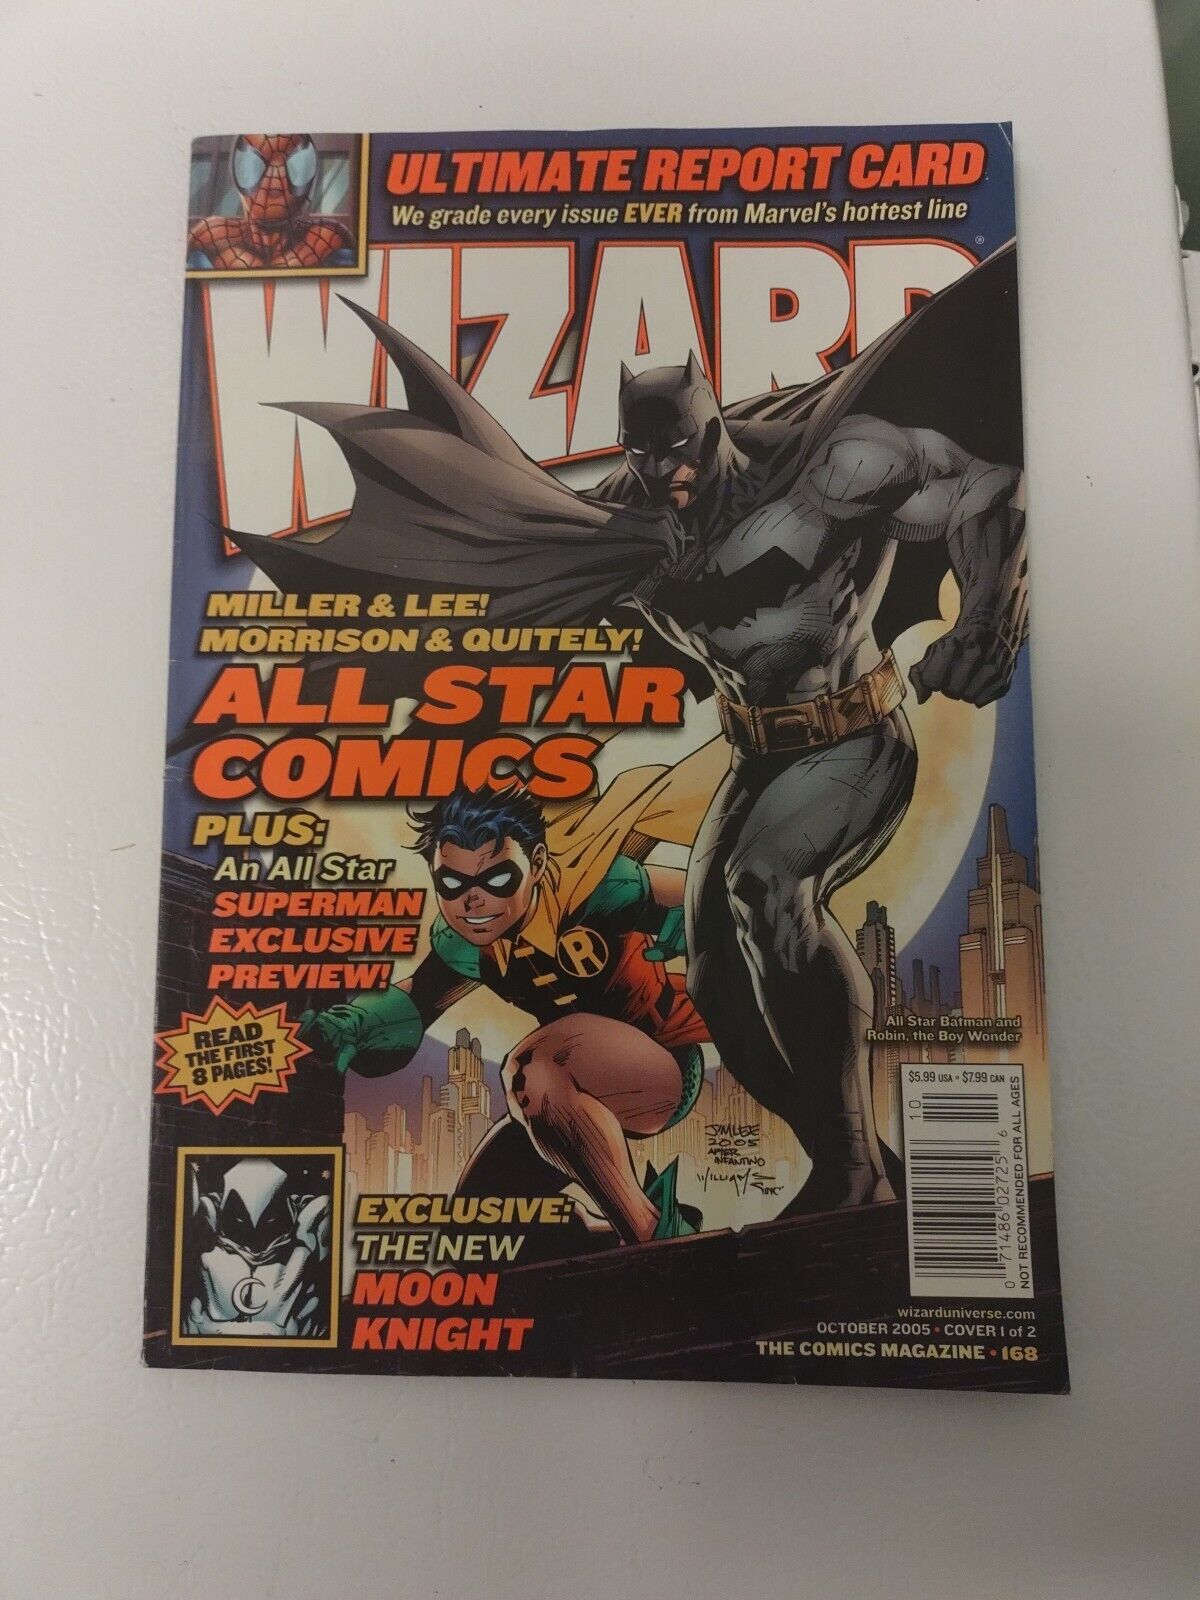 Wizard #168 October 2005, Jim Lee Cover, All Star Batman, The Comics Magazine